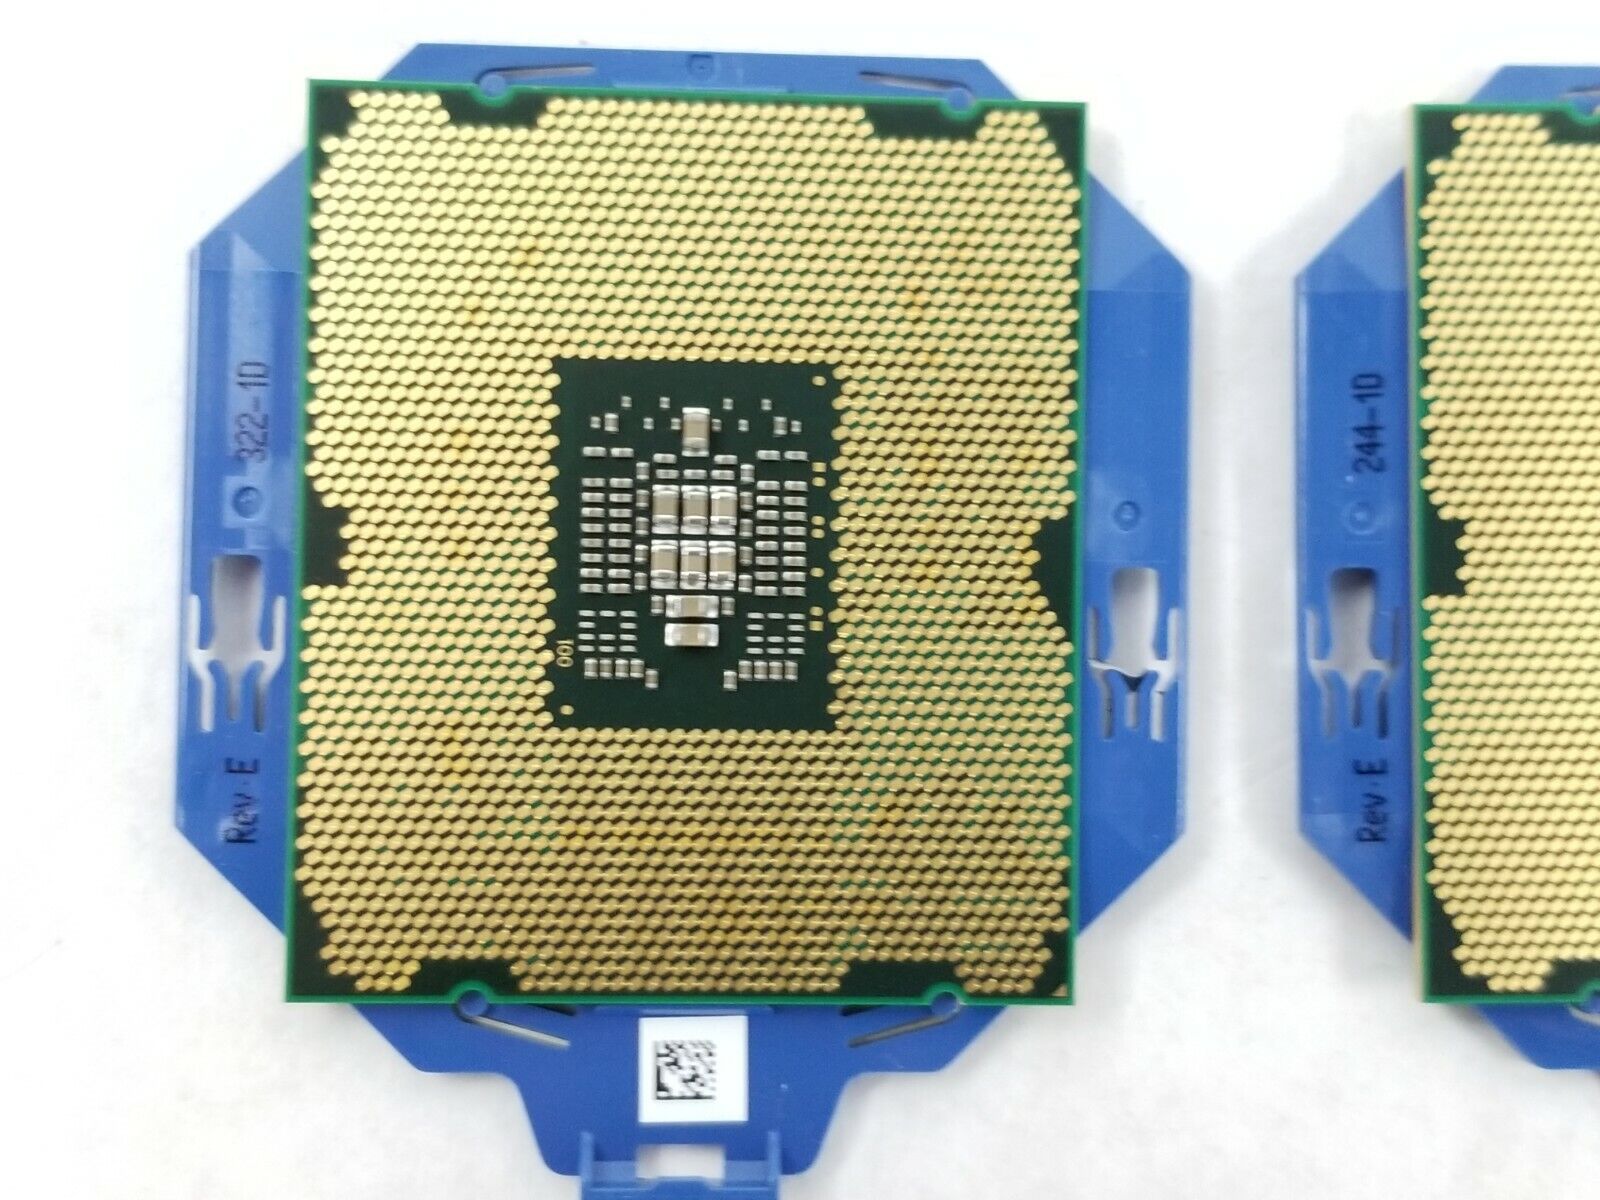 Matching Pair Intel Xeon E5-2609 SR0LA 2.40GHz Quad Core LGA2011 CPU